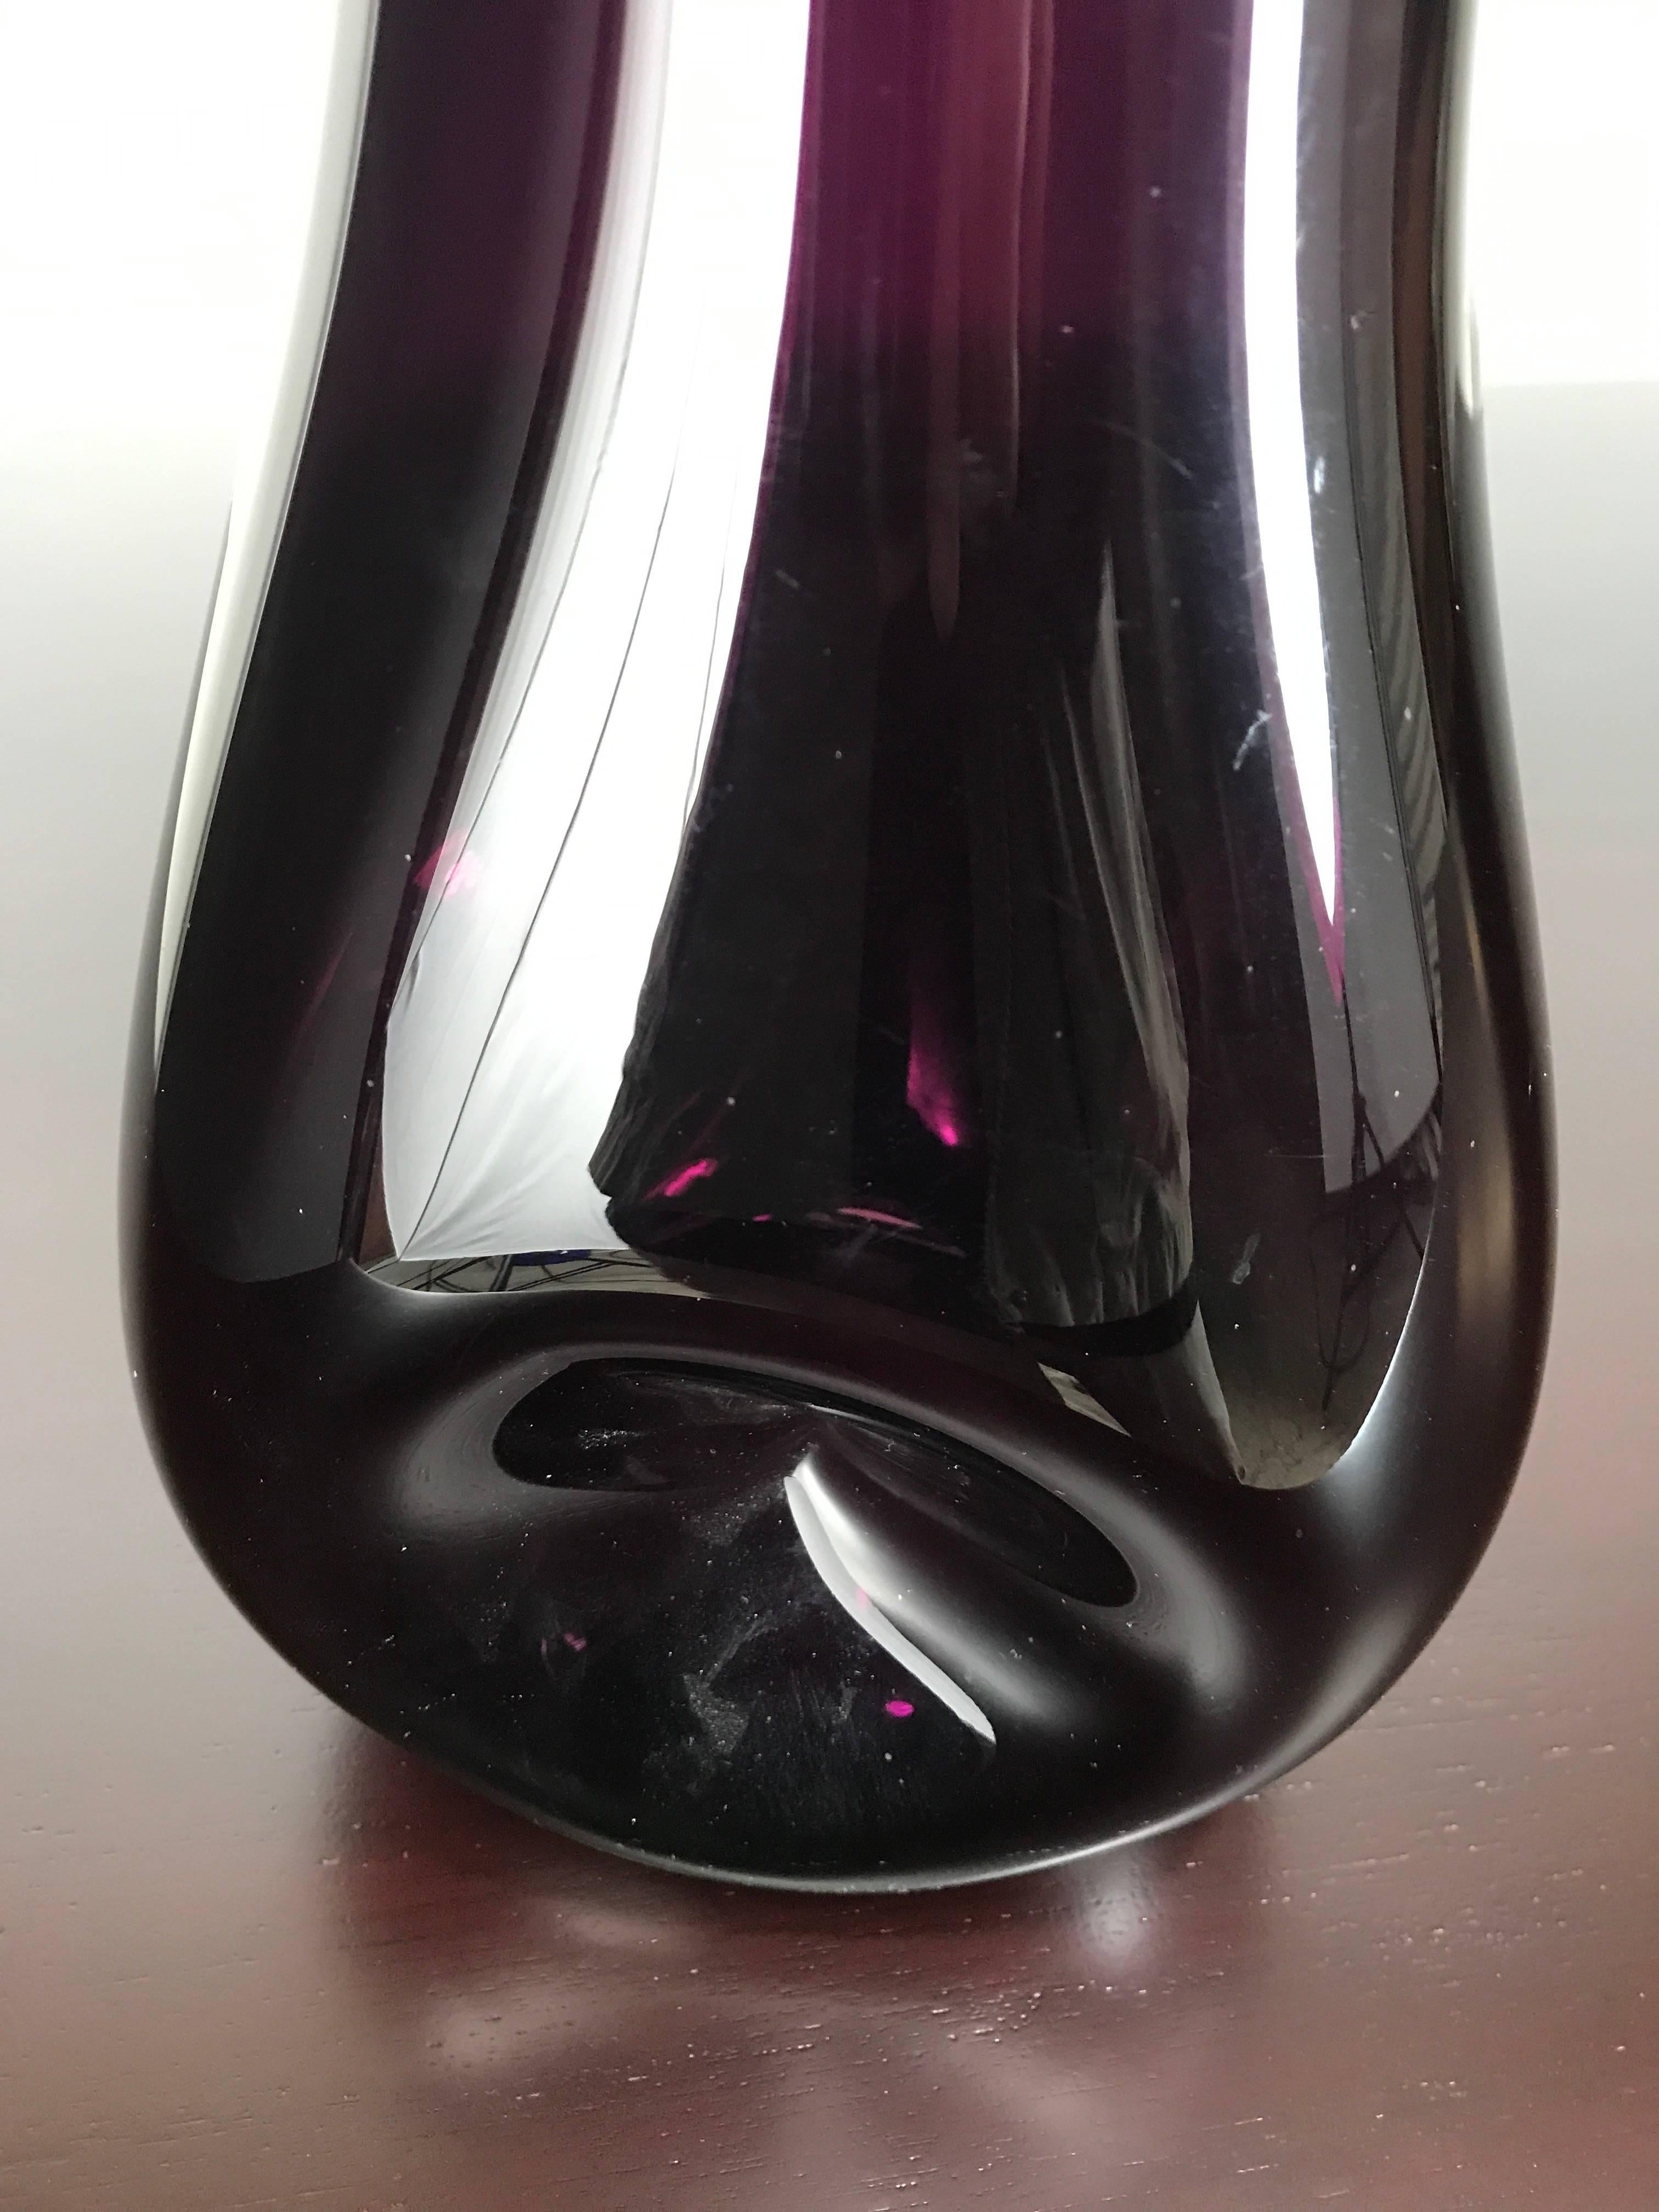 Wayne Husted for Blenko dimpled glass vase, wonderful color and form. Amazing surrealistic design.